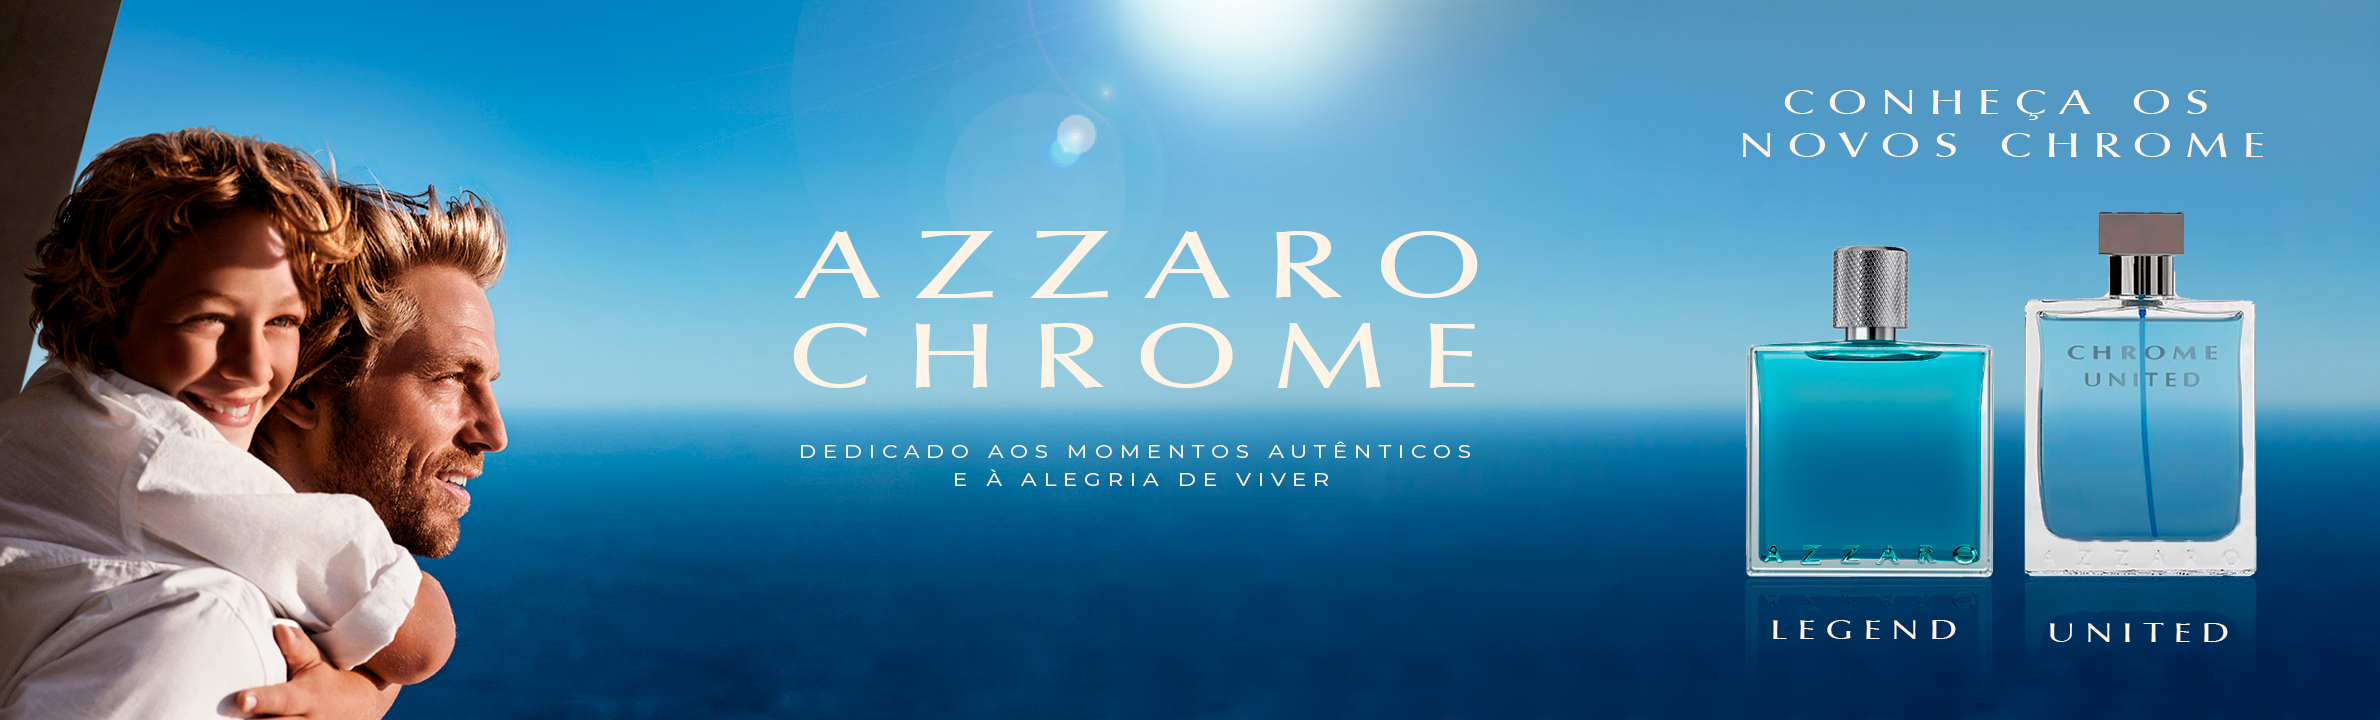 AZZARO Chrome | Legend and United